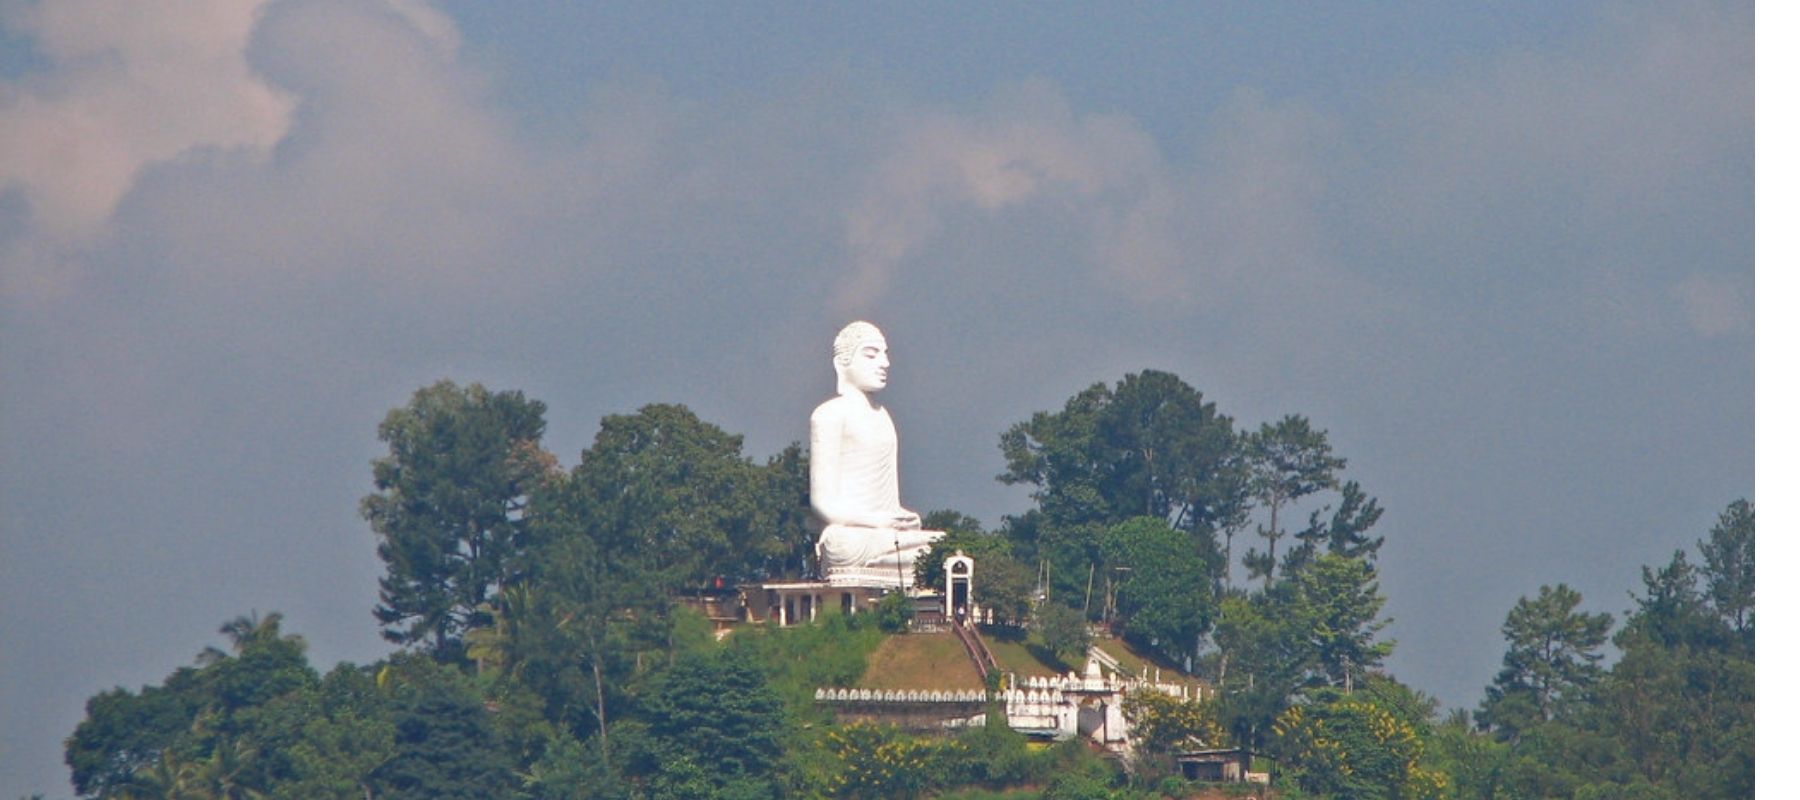 nudging header buddha "Sri Lanka - 028 - Kandy Buddha statue" by mckaysavage is licensed under CC BY 2.0